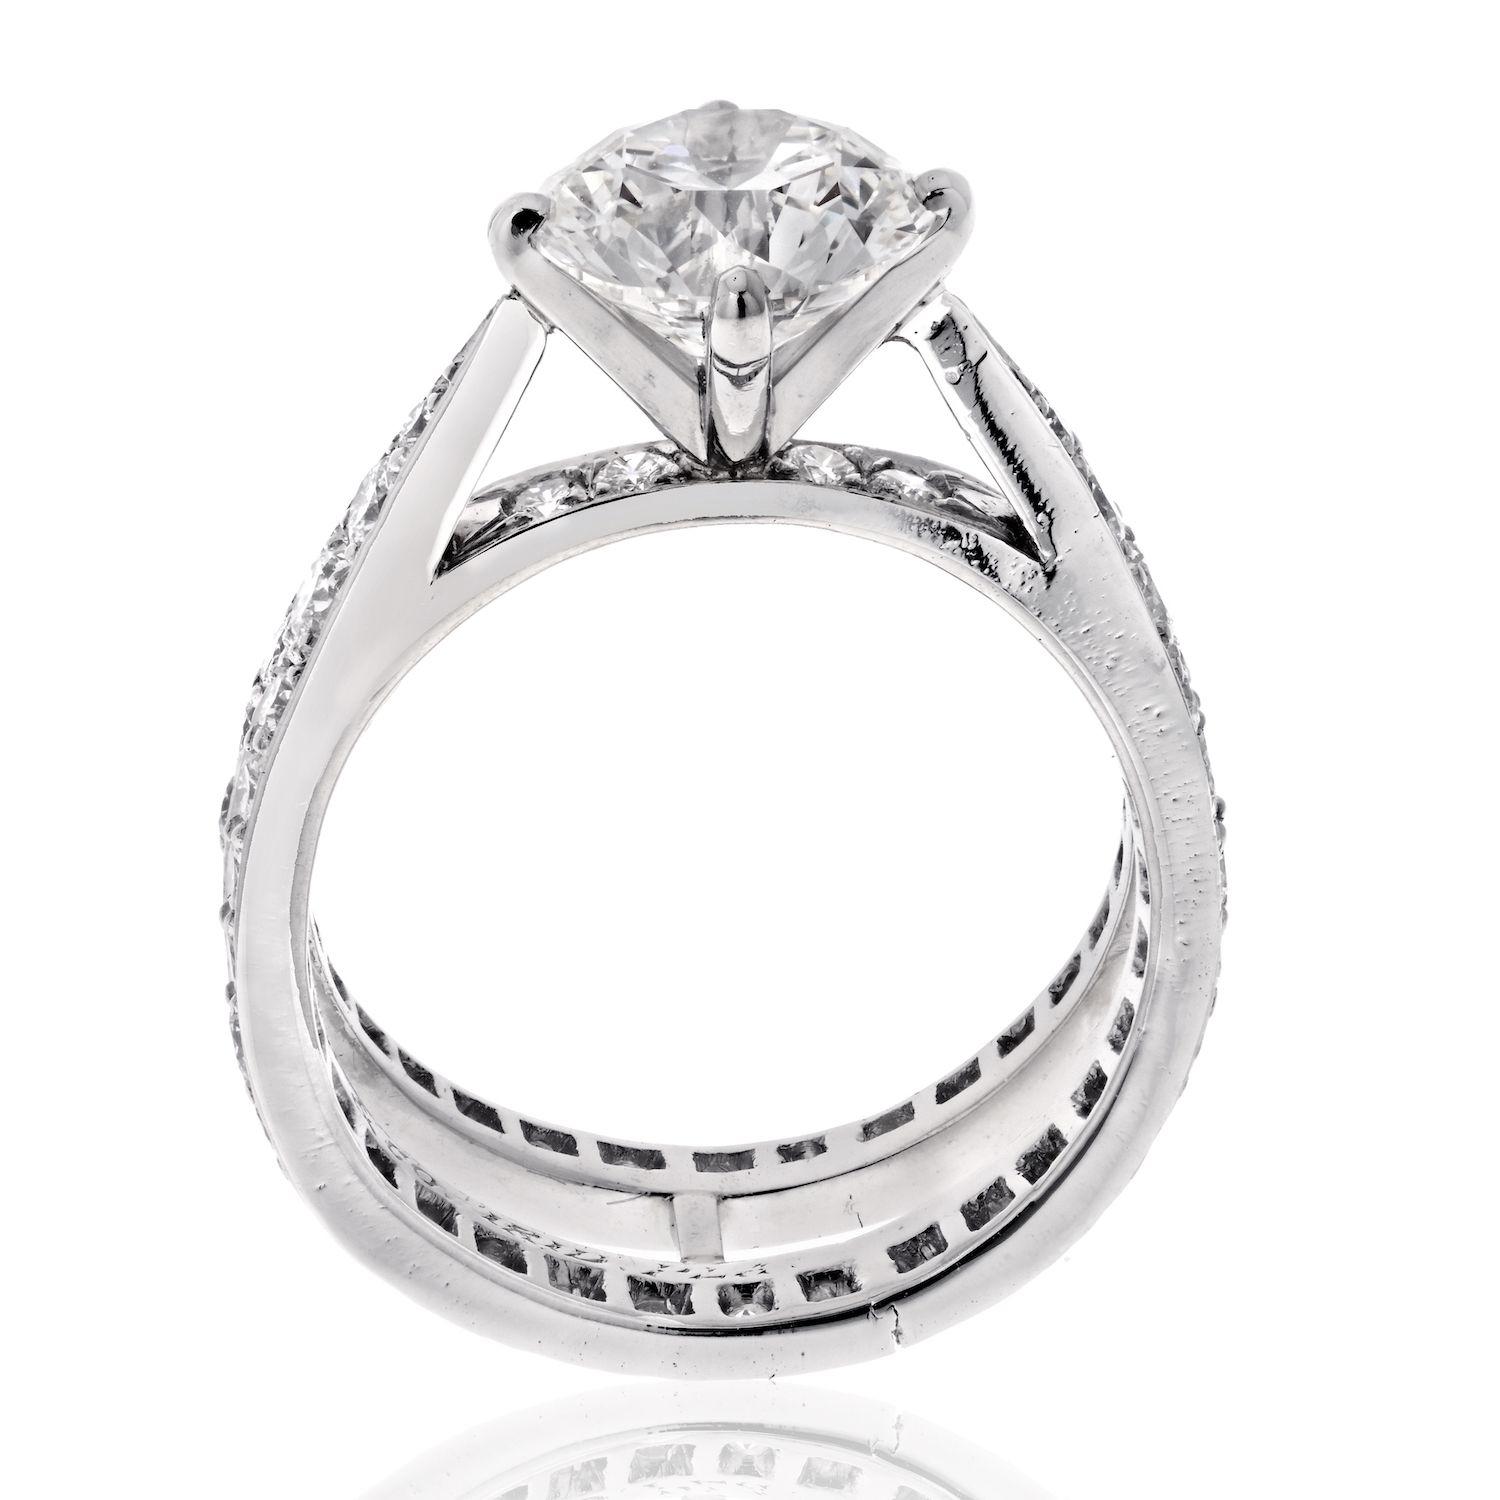 1.79 carat diamond ring